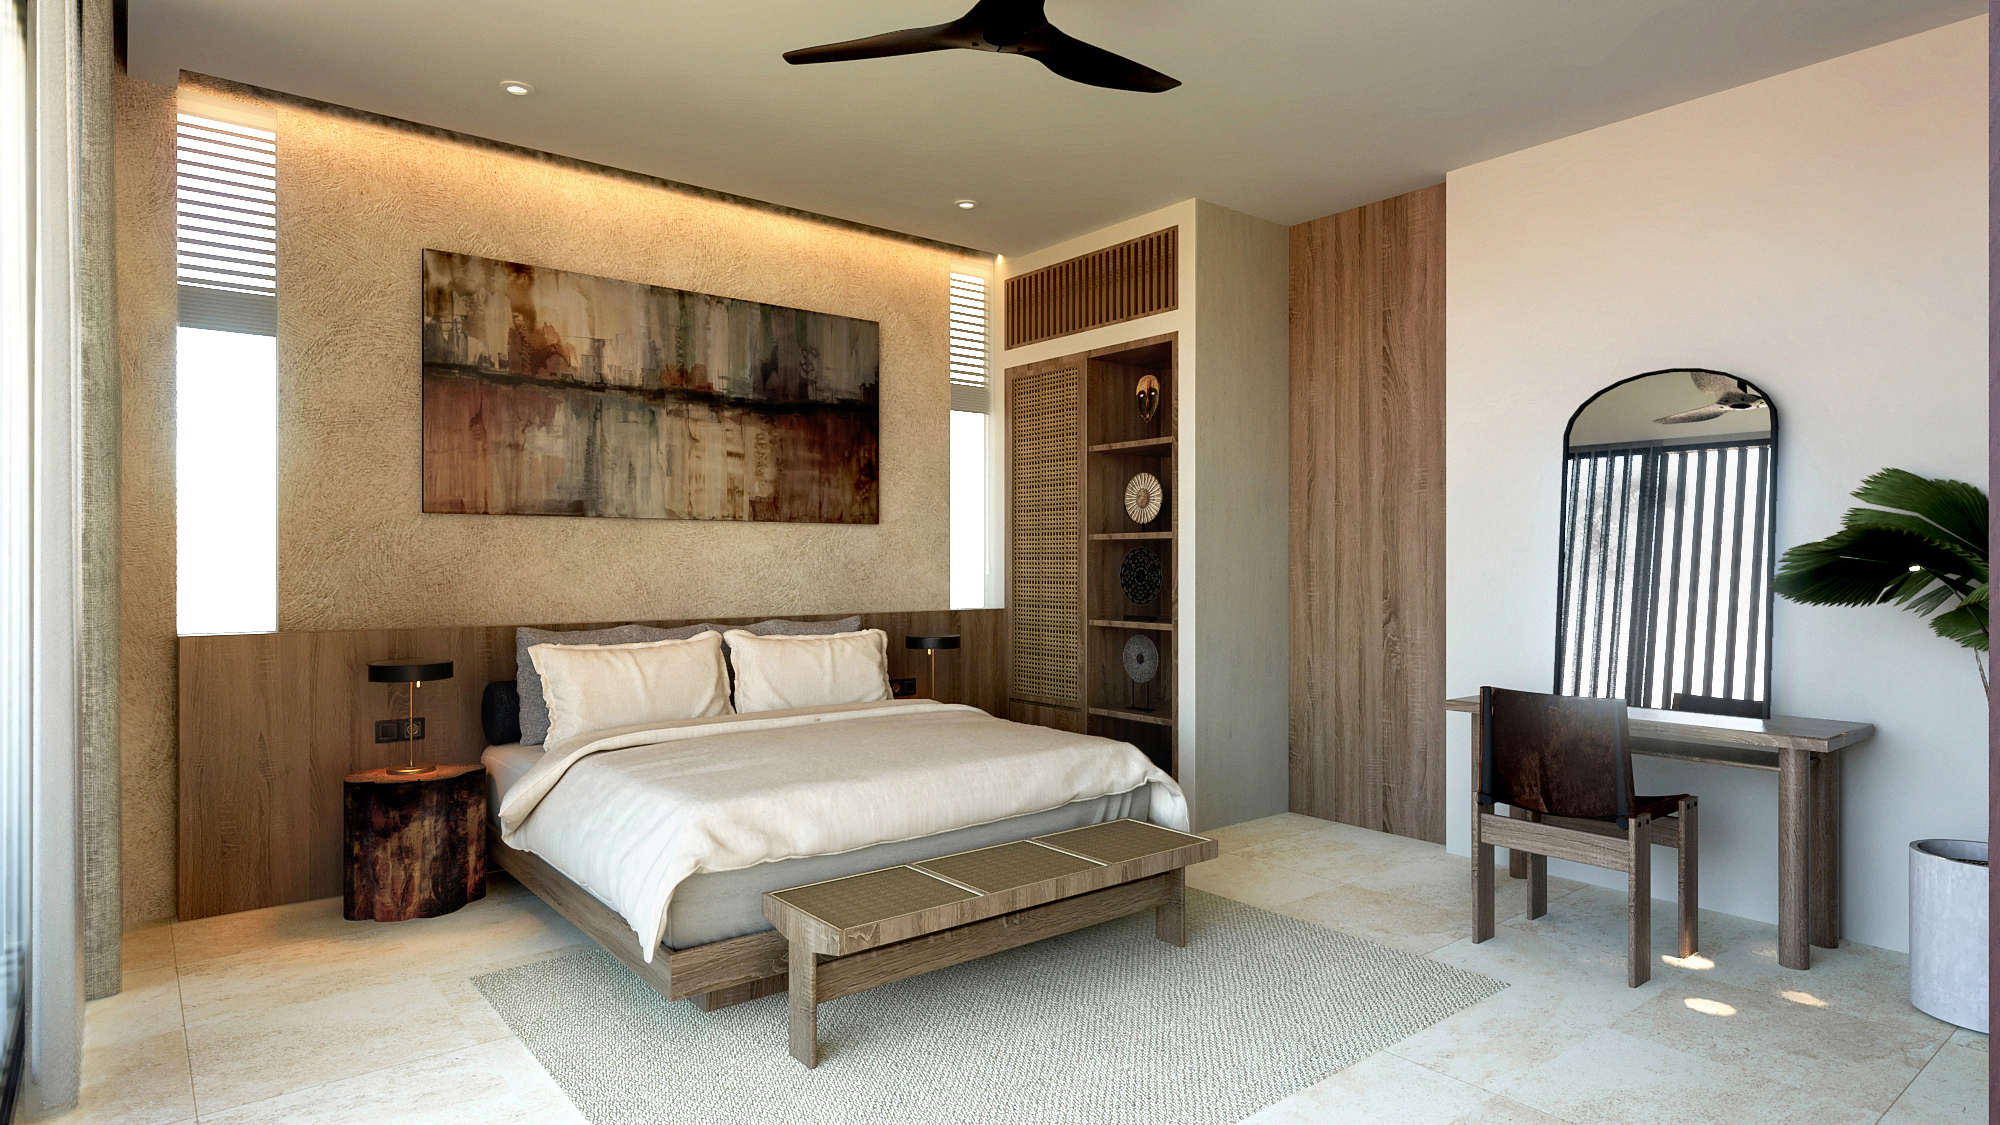 Design Assembly - Dreamland Villas - Bali Architect - Interior Design - Bali Villa - Bedroom